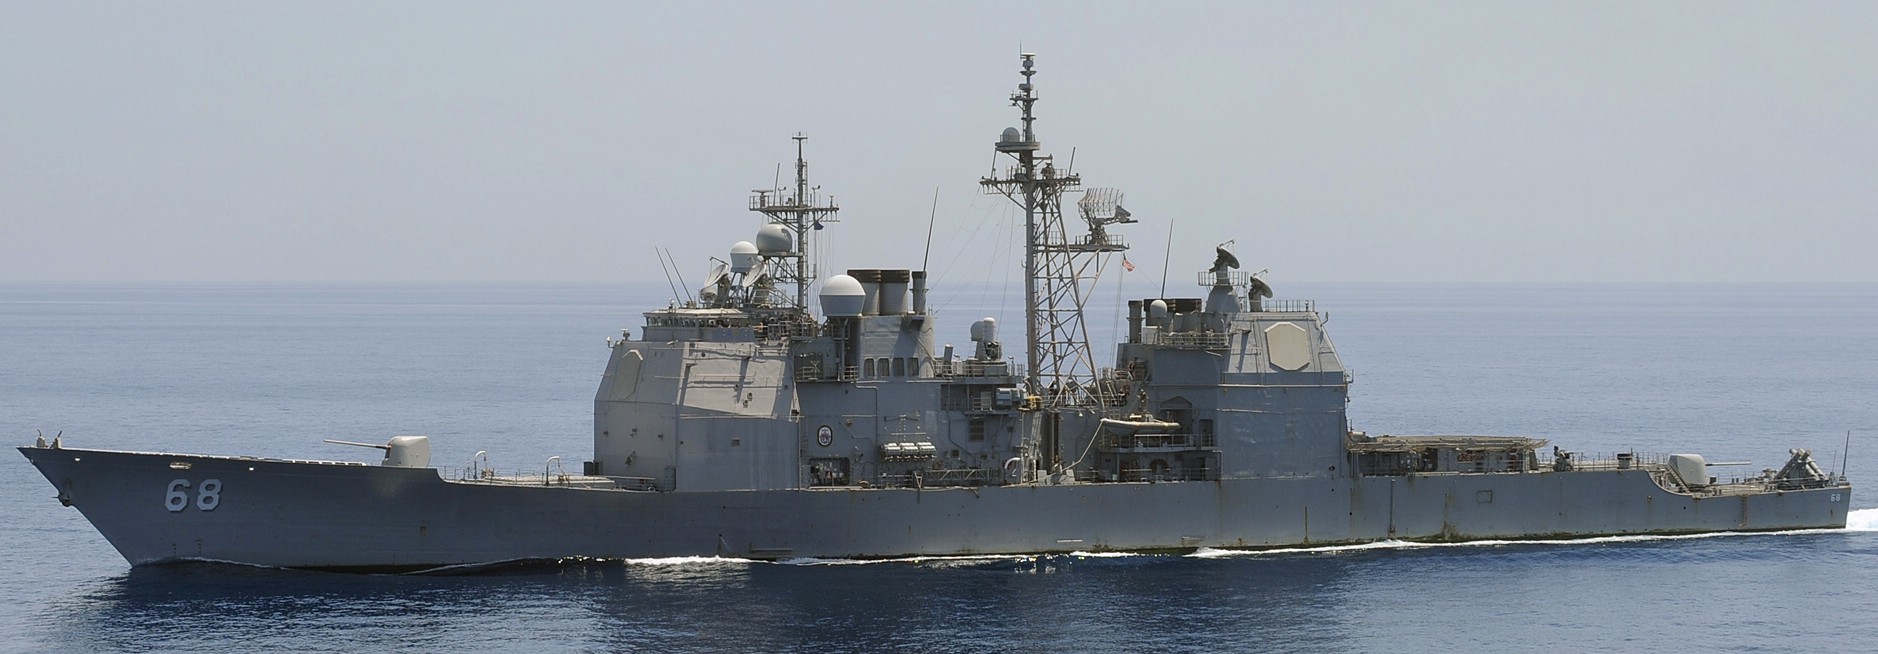 cg-68 uss anzio ticonderoga class guided missile cruiser aegis us navy gulf aden 29